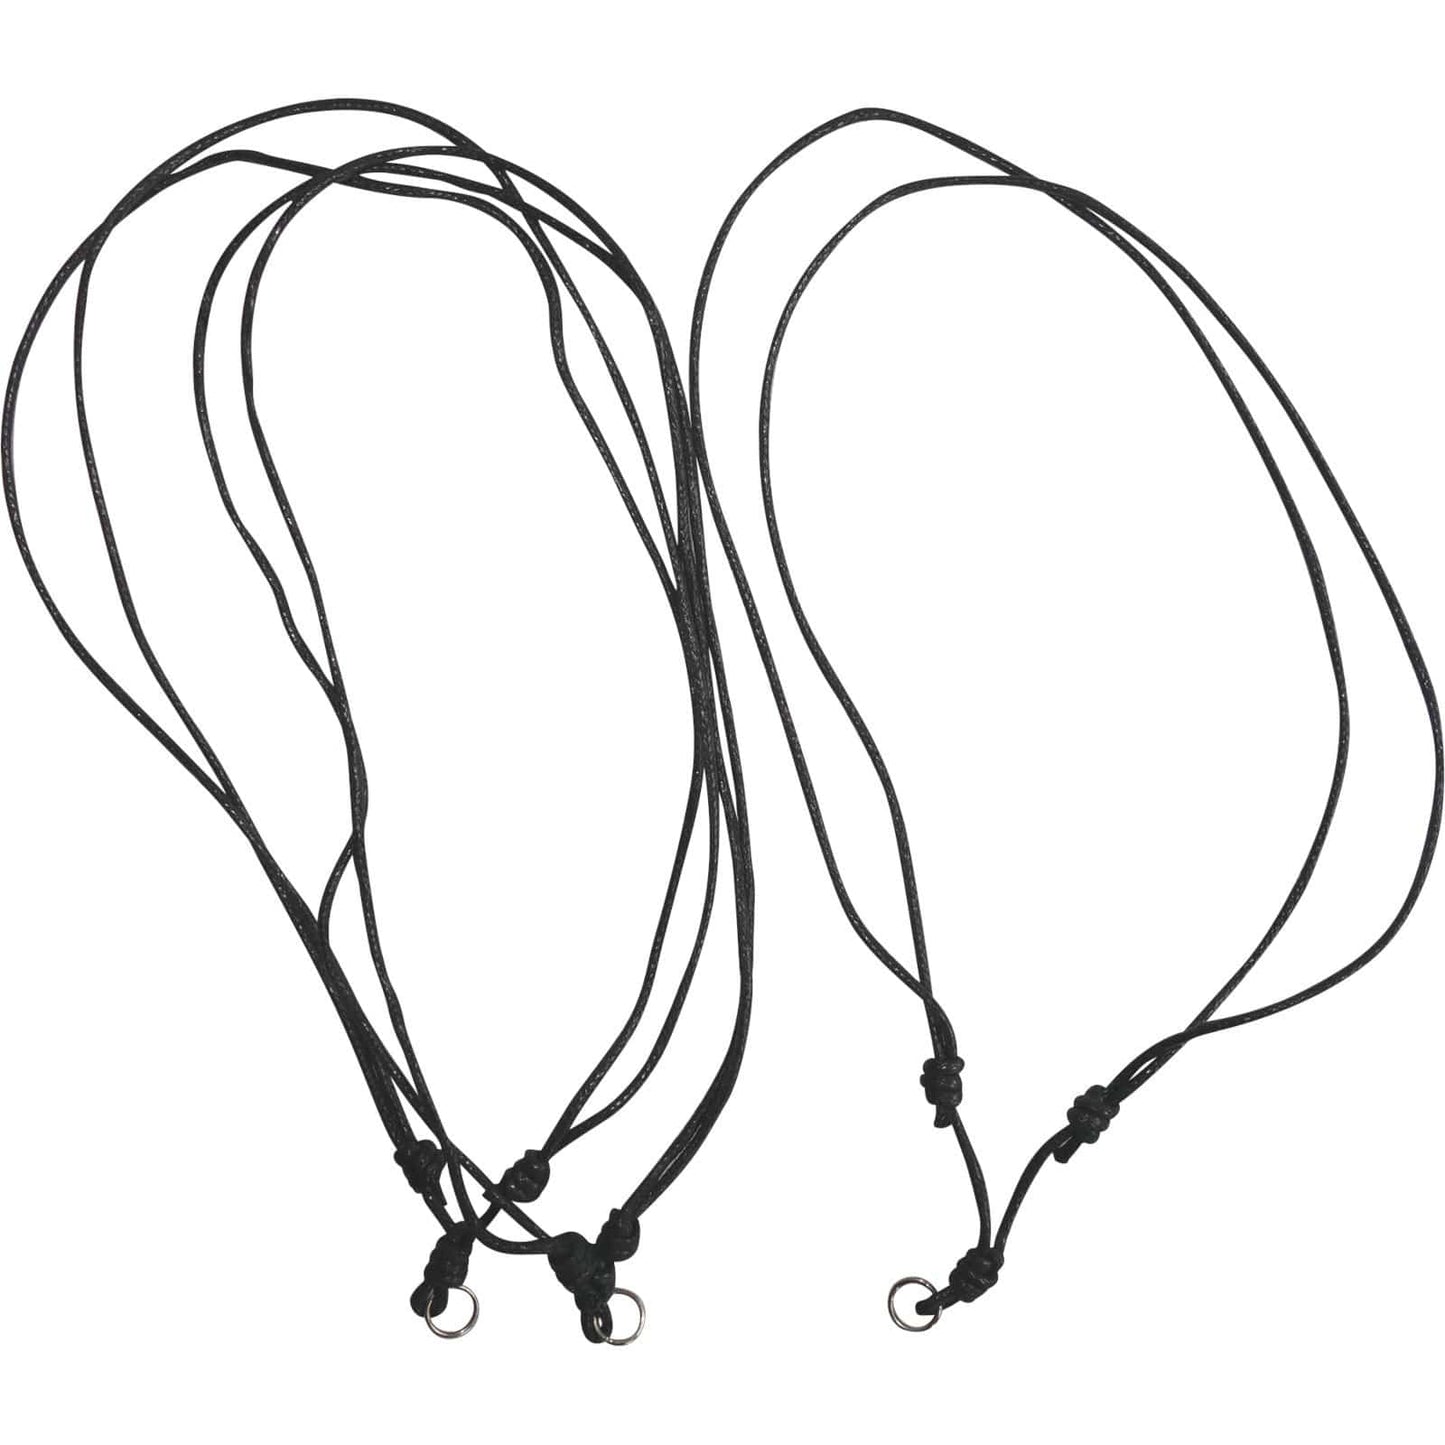 3 Black Hemp Cord Pendant Necklace Chains Chokers String Knot Ropes Bulk Wholesale